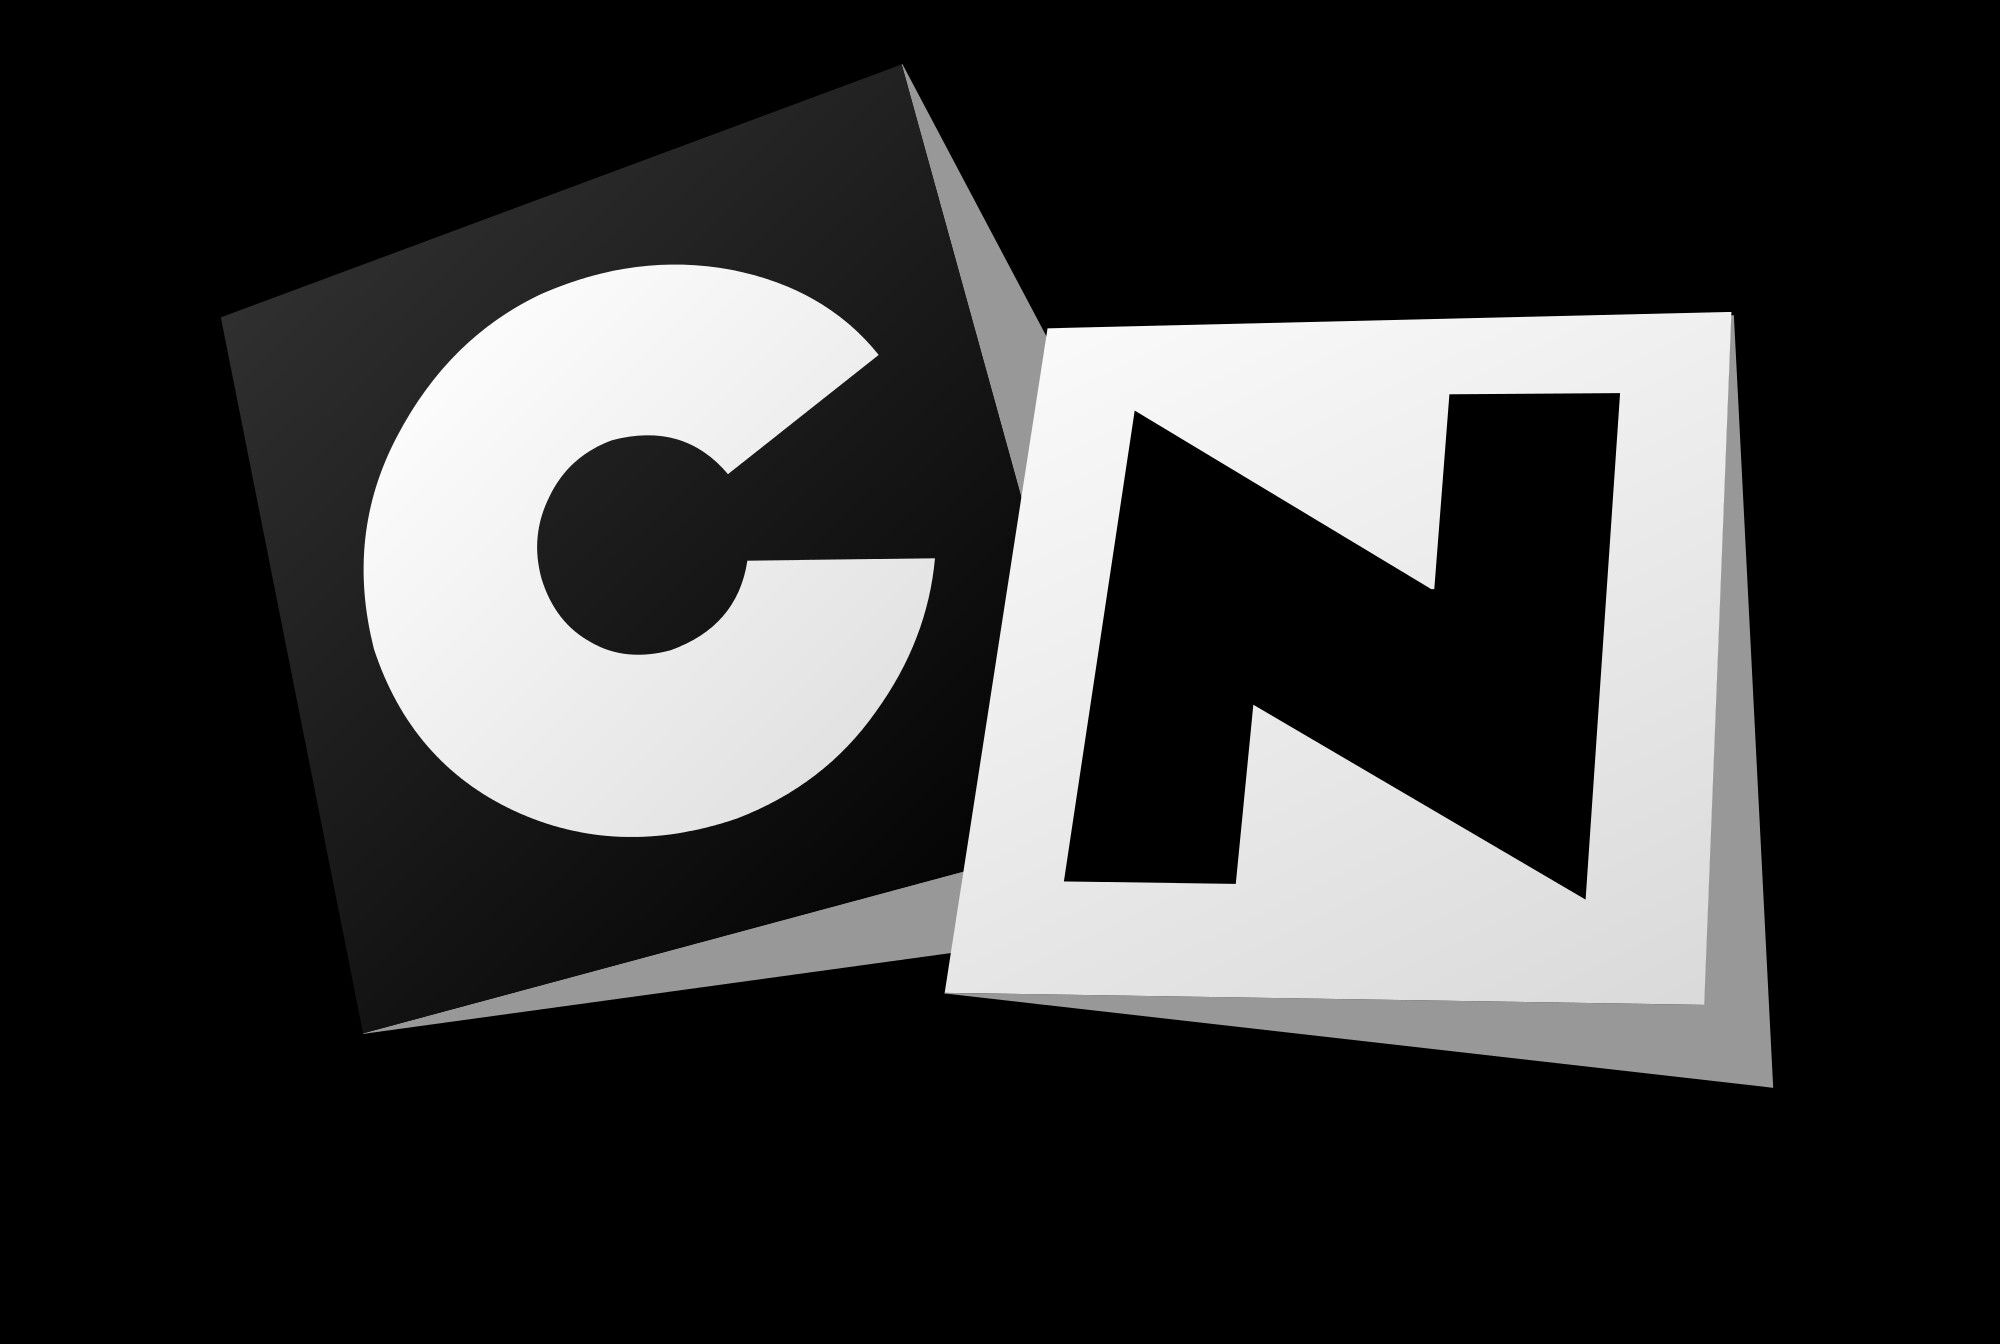 Cartoon network türkiye. Картун нетворк. Телеканал cartoon Network. Картун нетворк 2005. Картун нетворк лого.